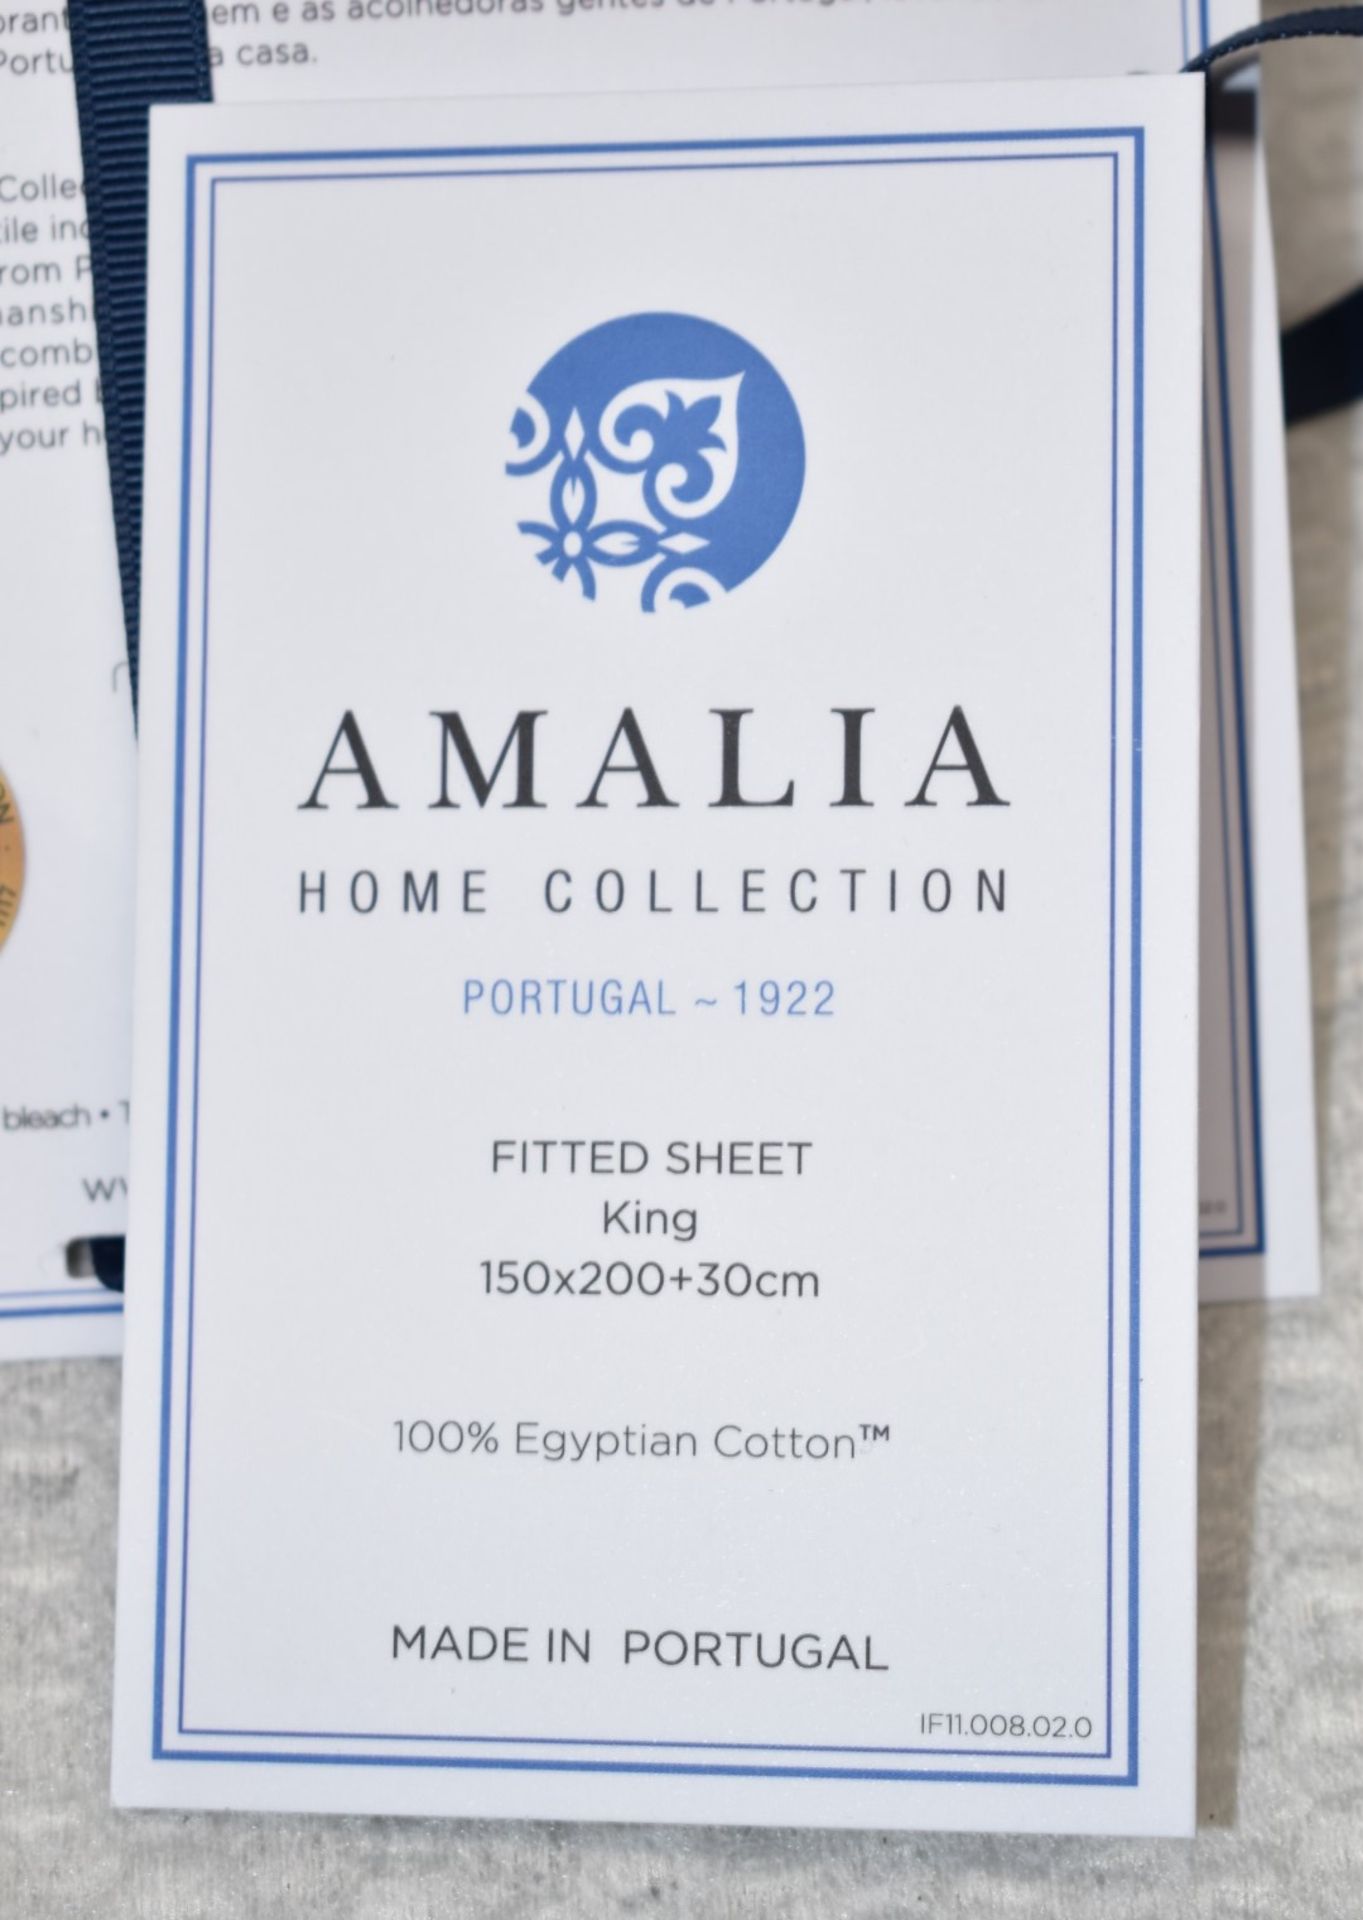 1 x AMALIA Suave King Fitted Sheet (150cm x 200cm) - Original Price £96.95 - Image 3 of 5